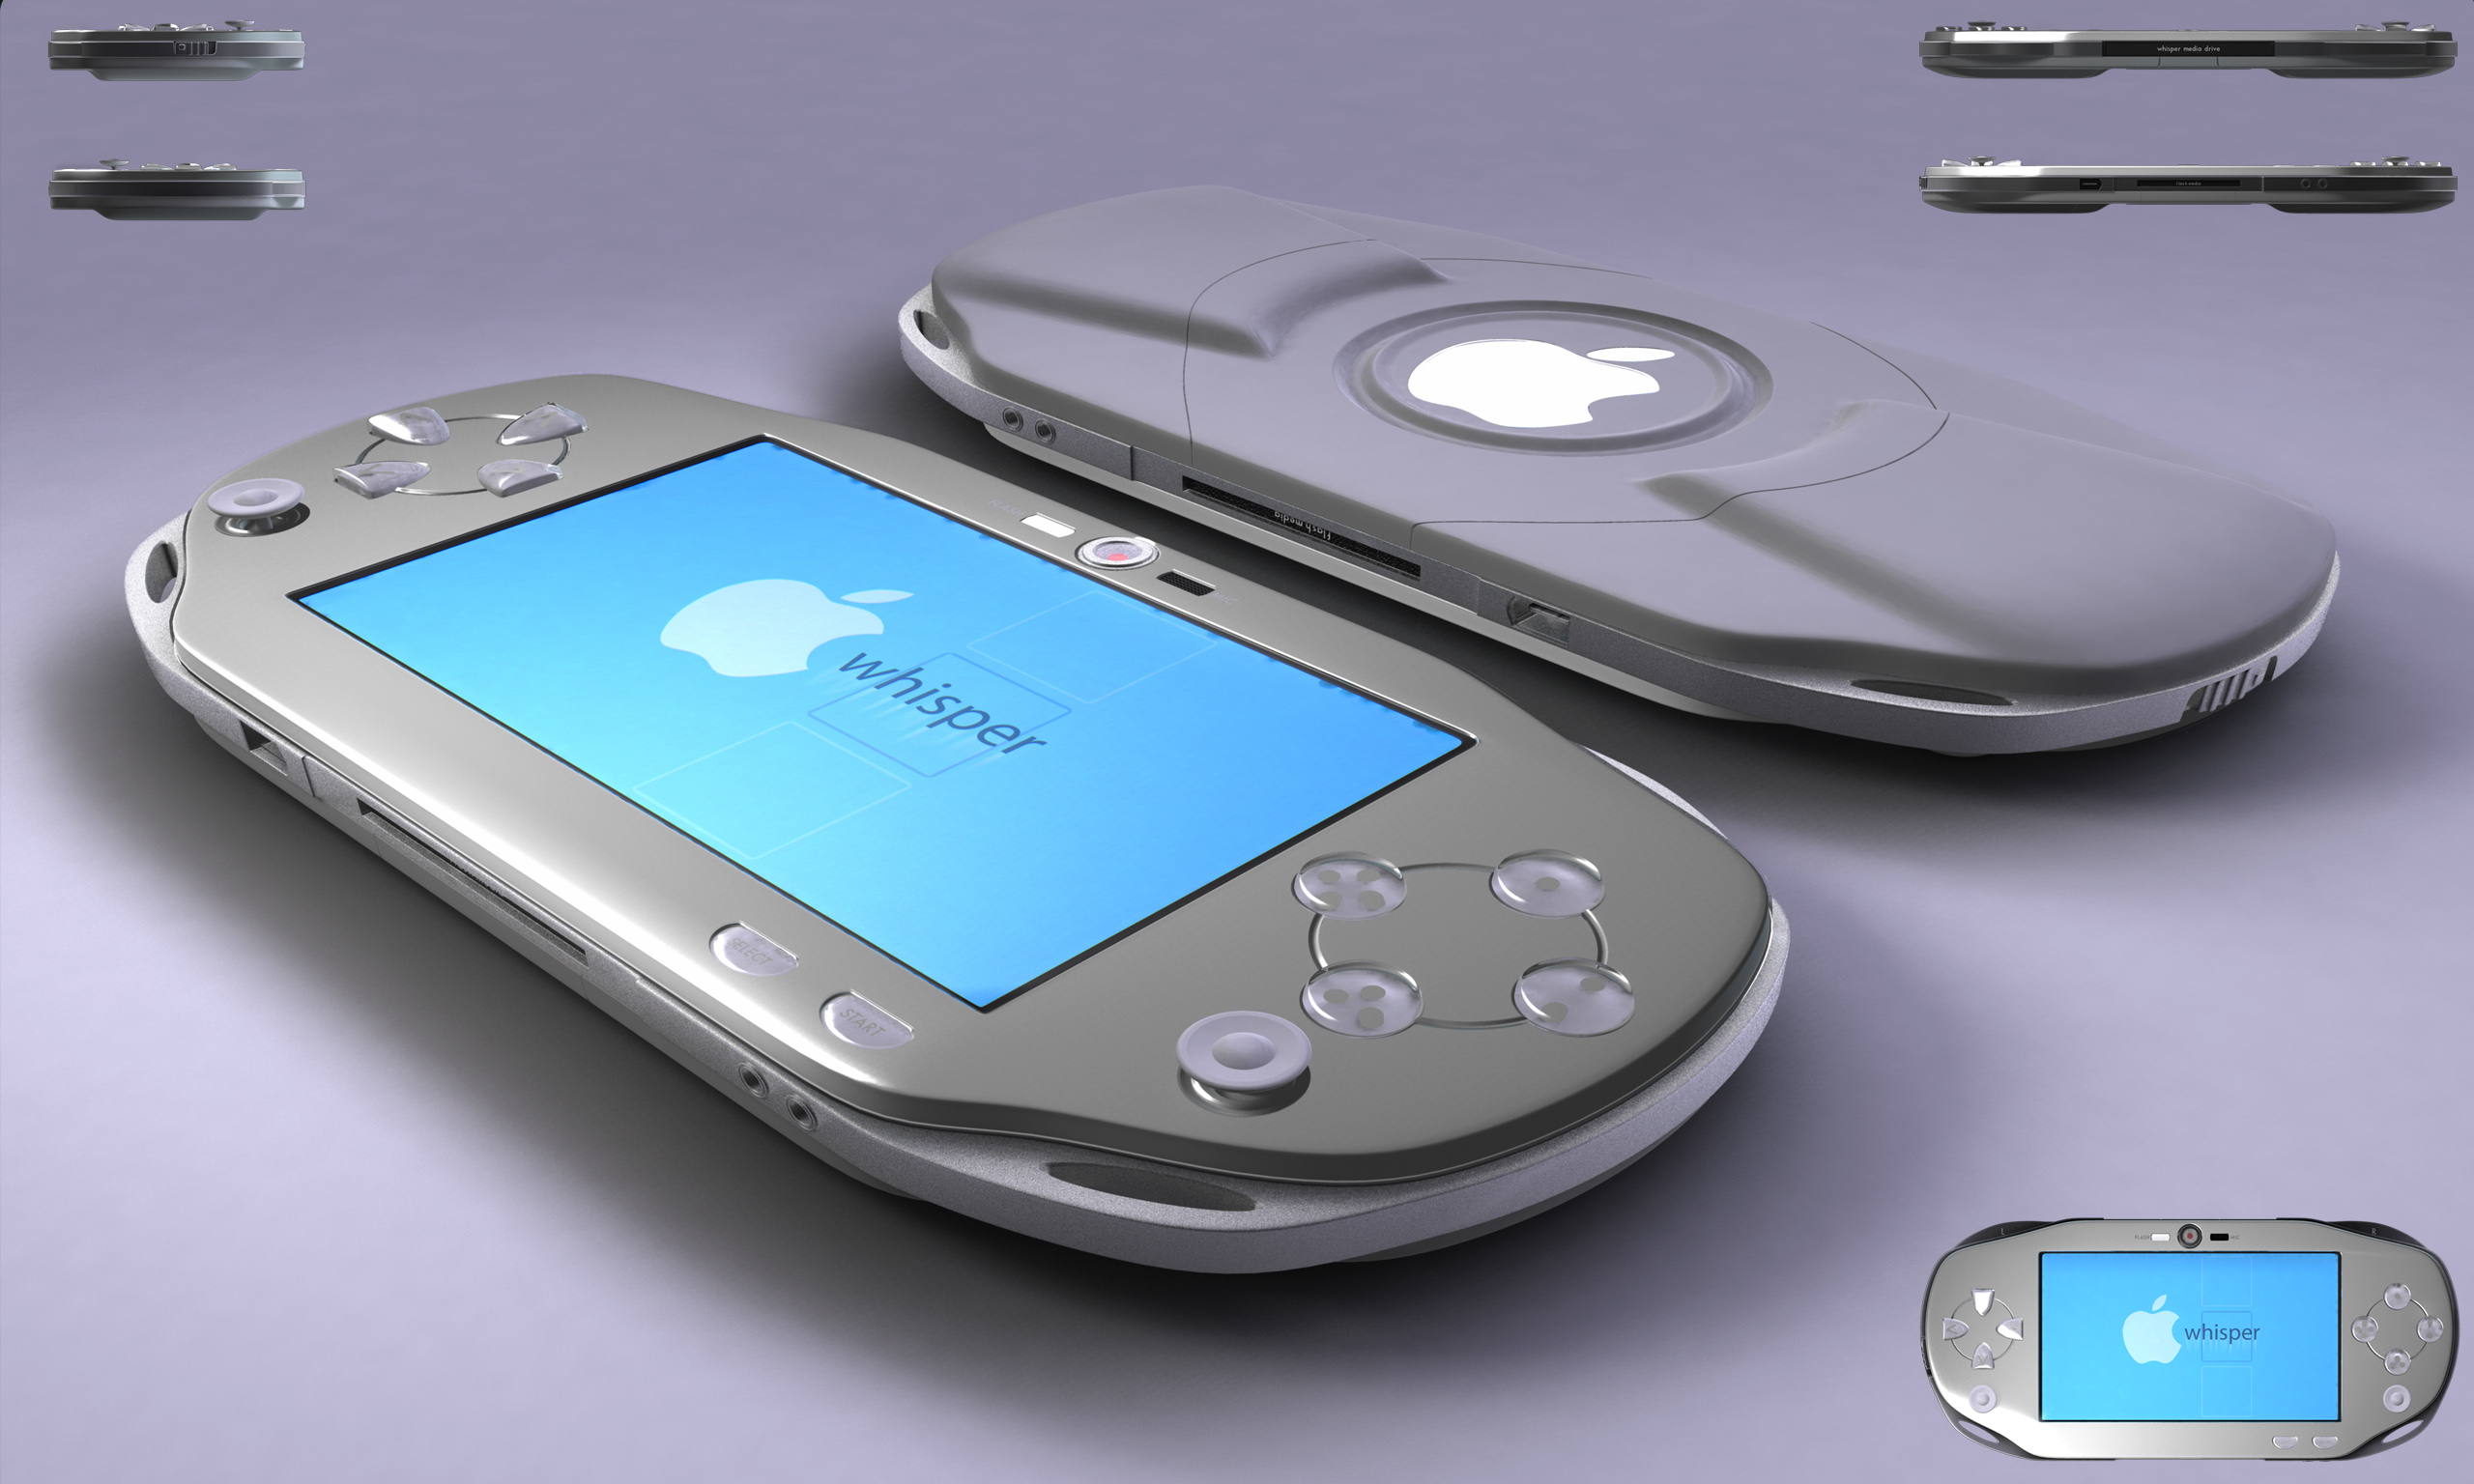  Portable Game Device Concept 